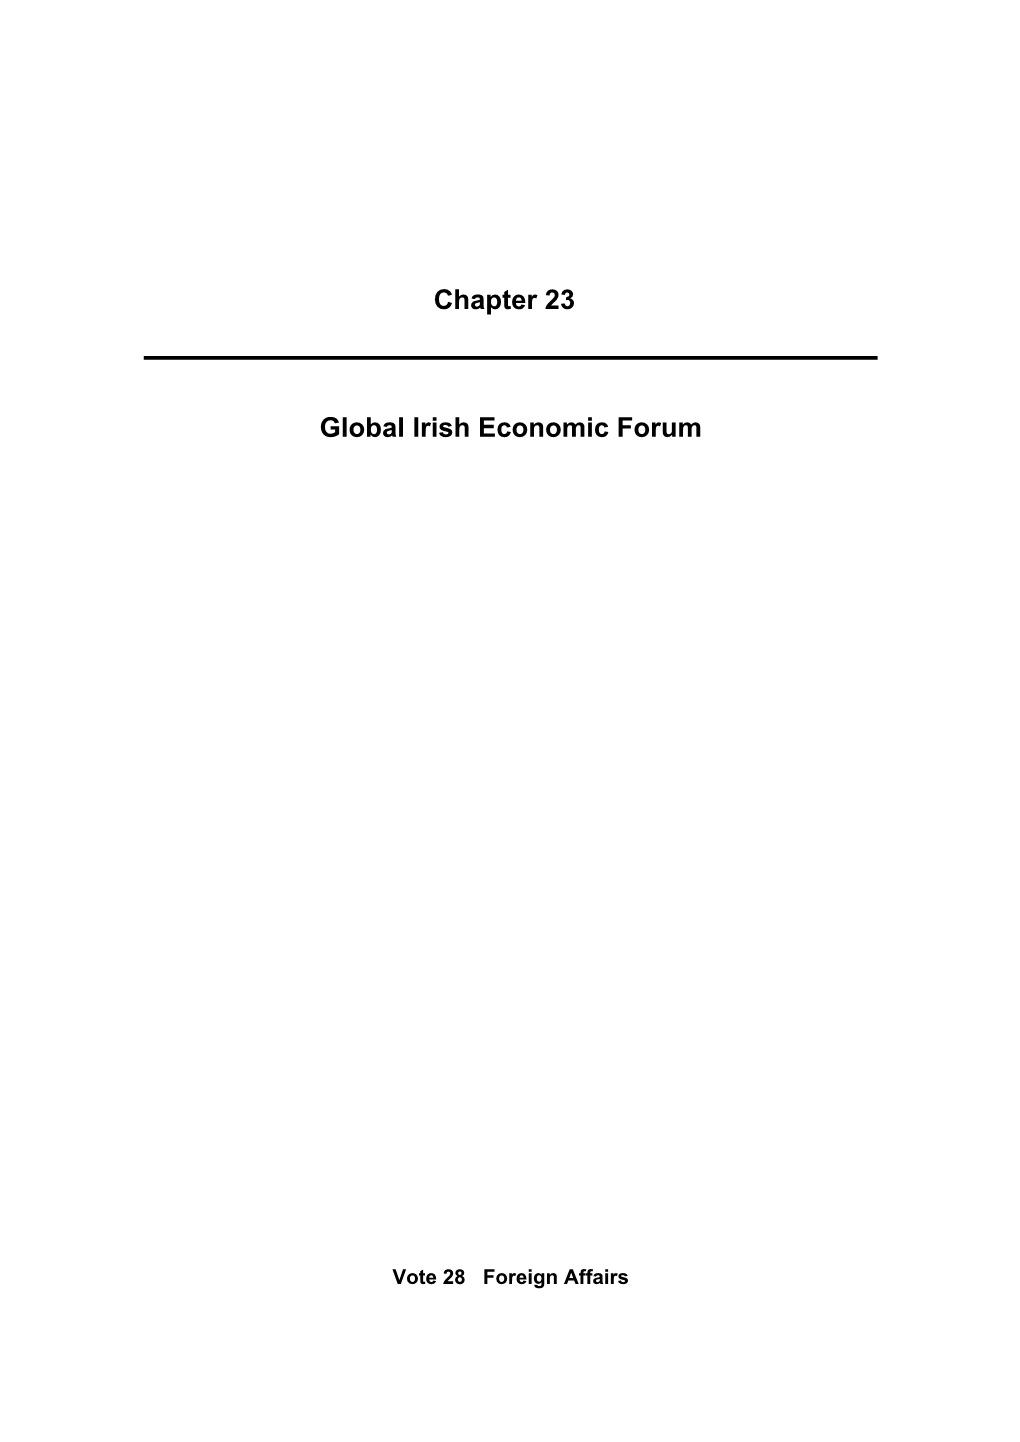 Chapter 23 Global Irish Economic Forum